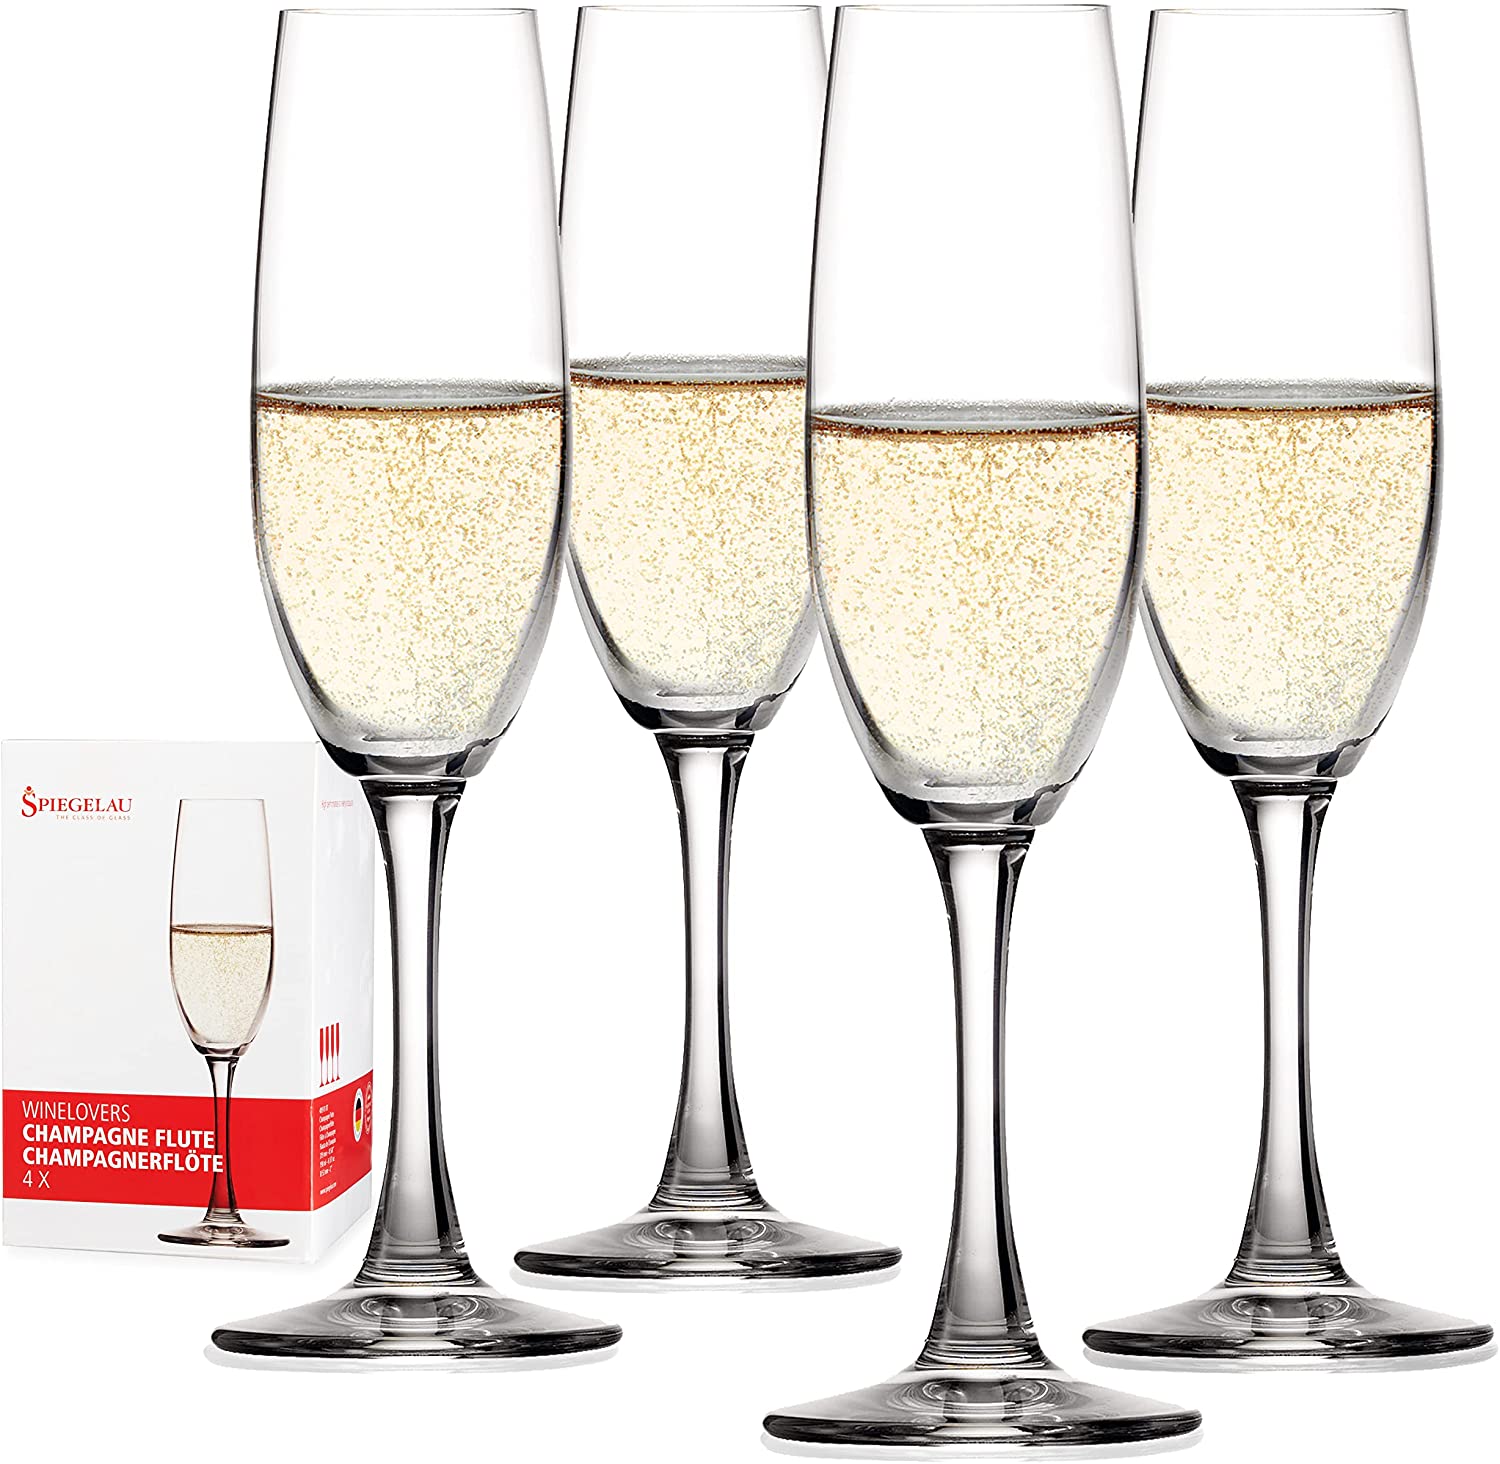 Spiegelau & Nachtmann Spiegelau Winelovers Champagne Flutes, Set of 4, Prosecco Glasses, Champagne Flute, Champagne Glass, Champagne Glass, Crystal Glass, Prosecco Glass 190 ml Set of 4090187